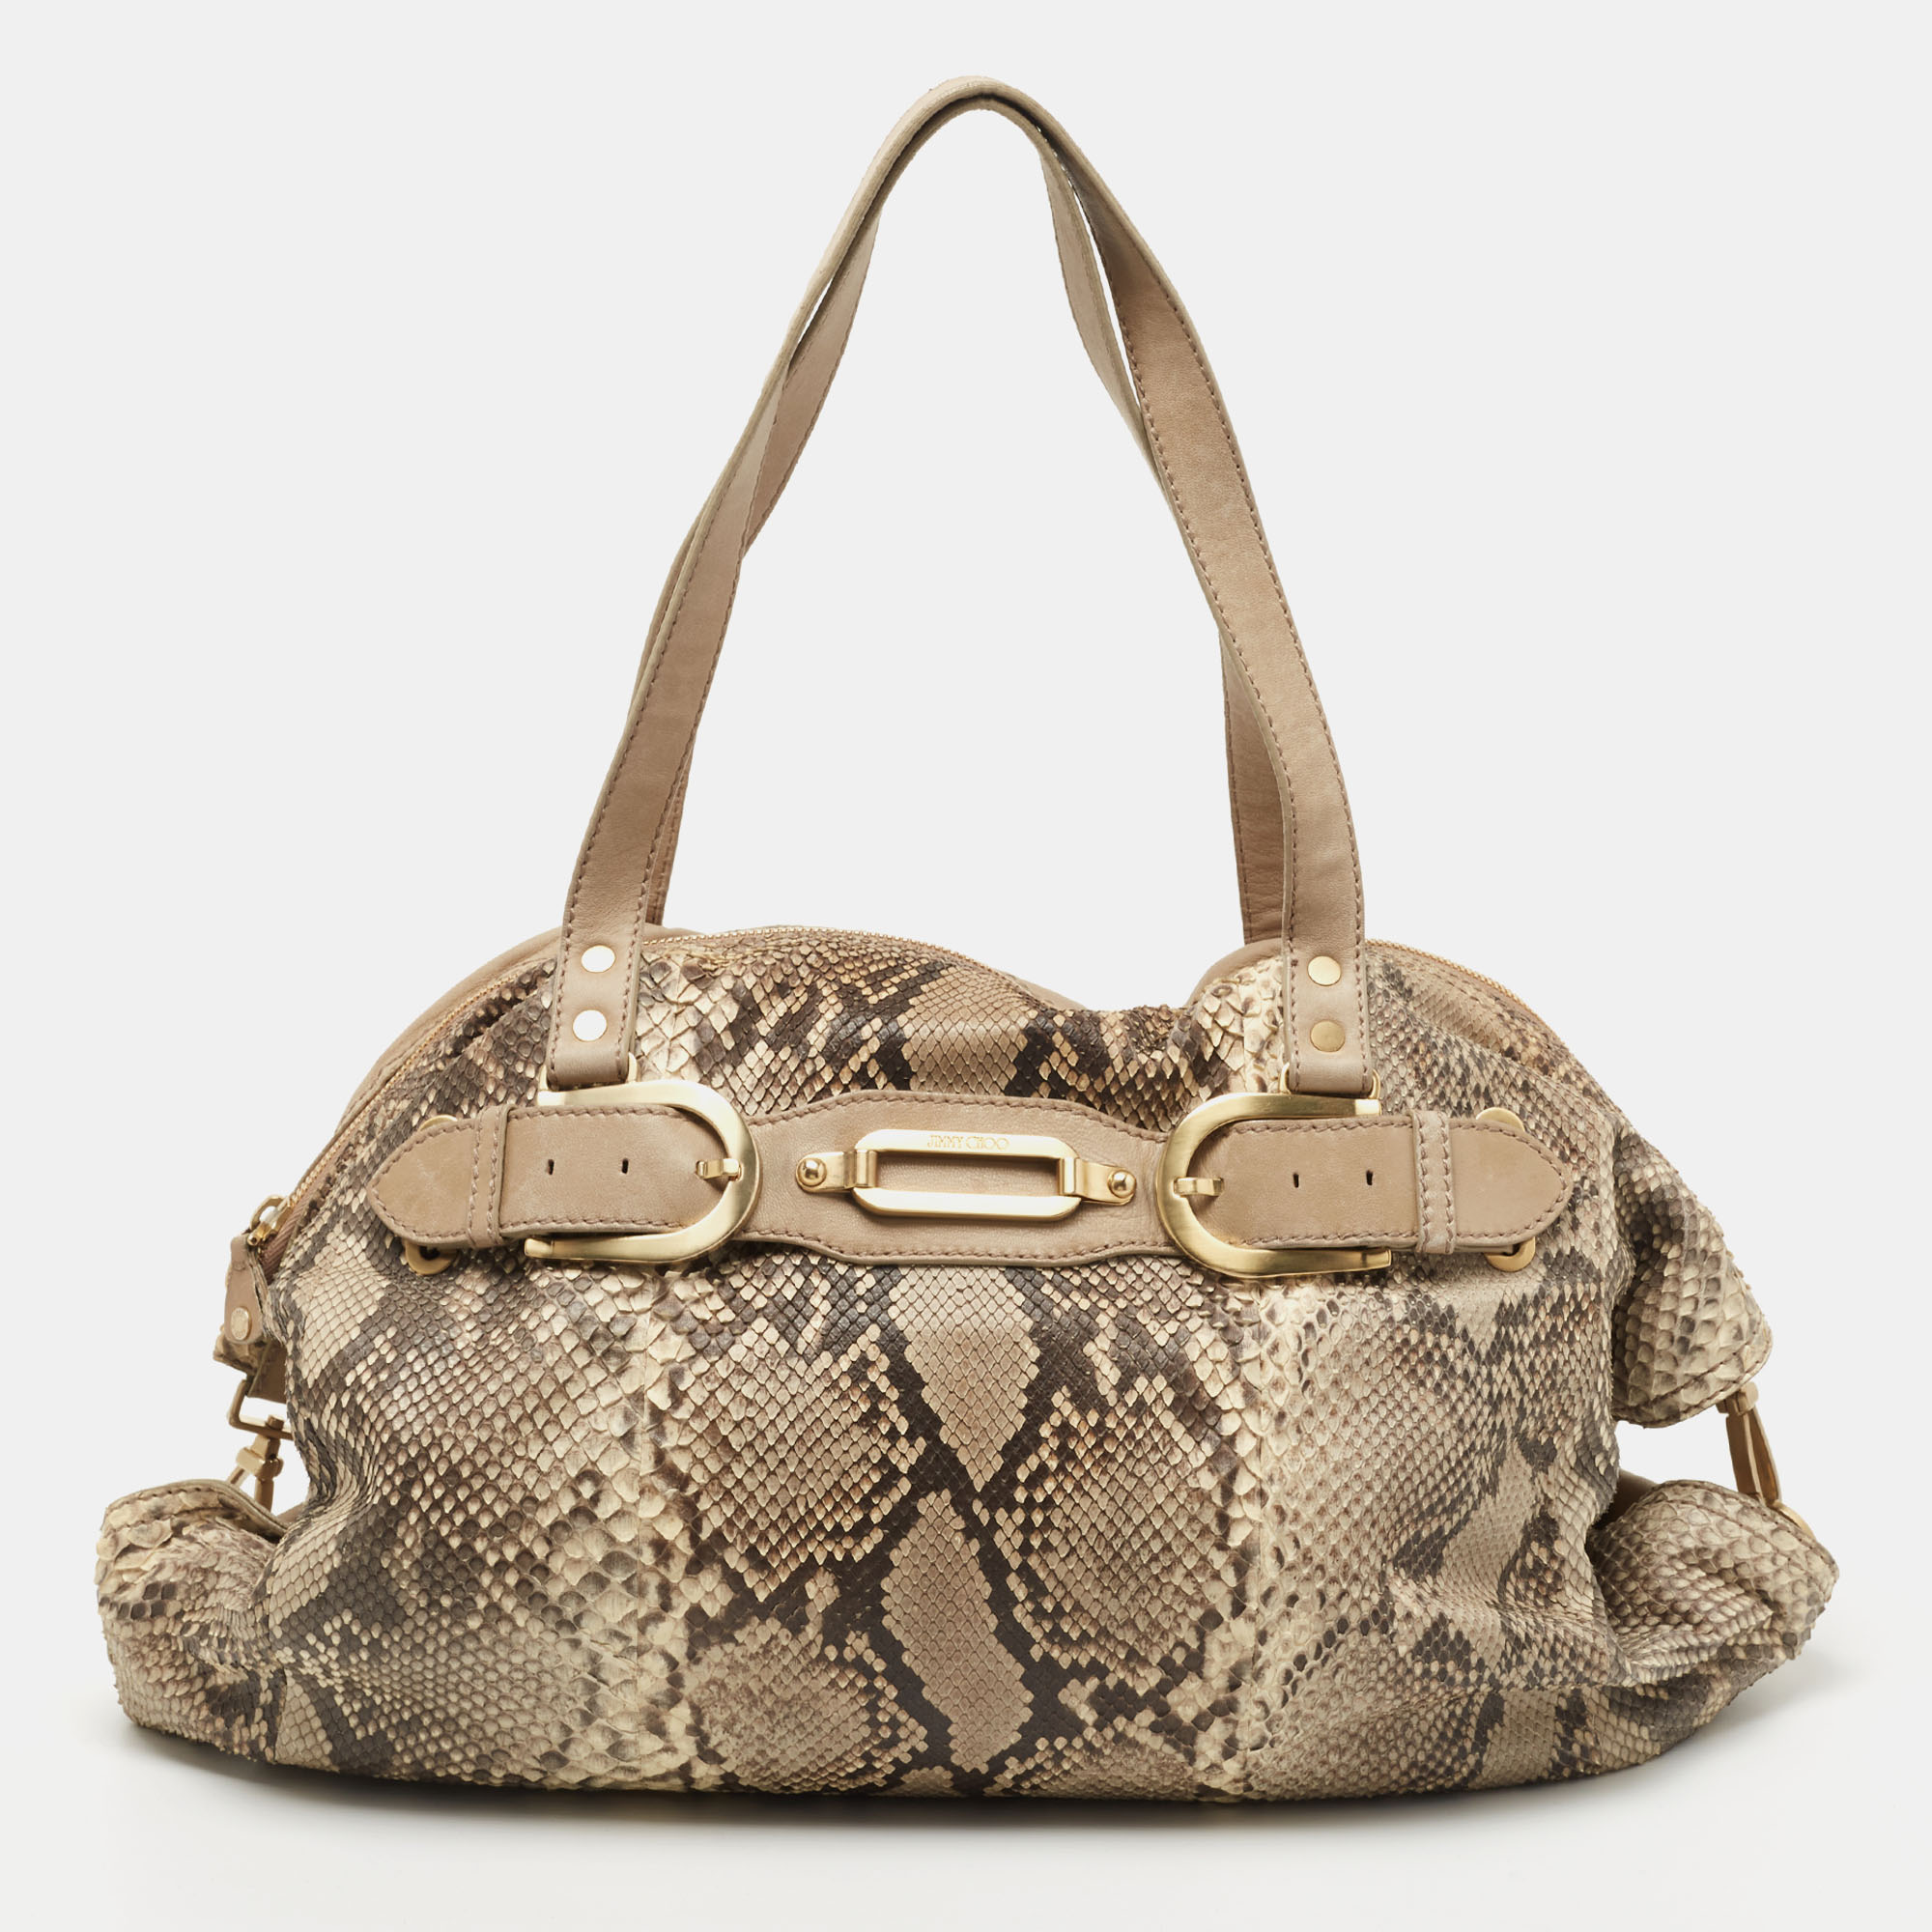 Jimmy choo beige/brown python satchel